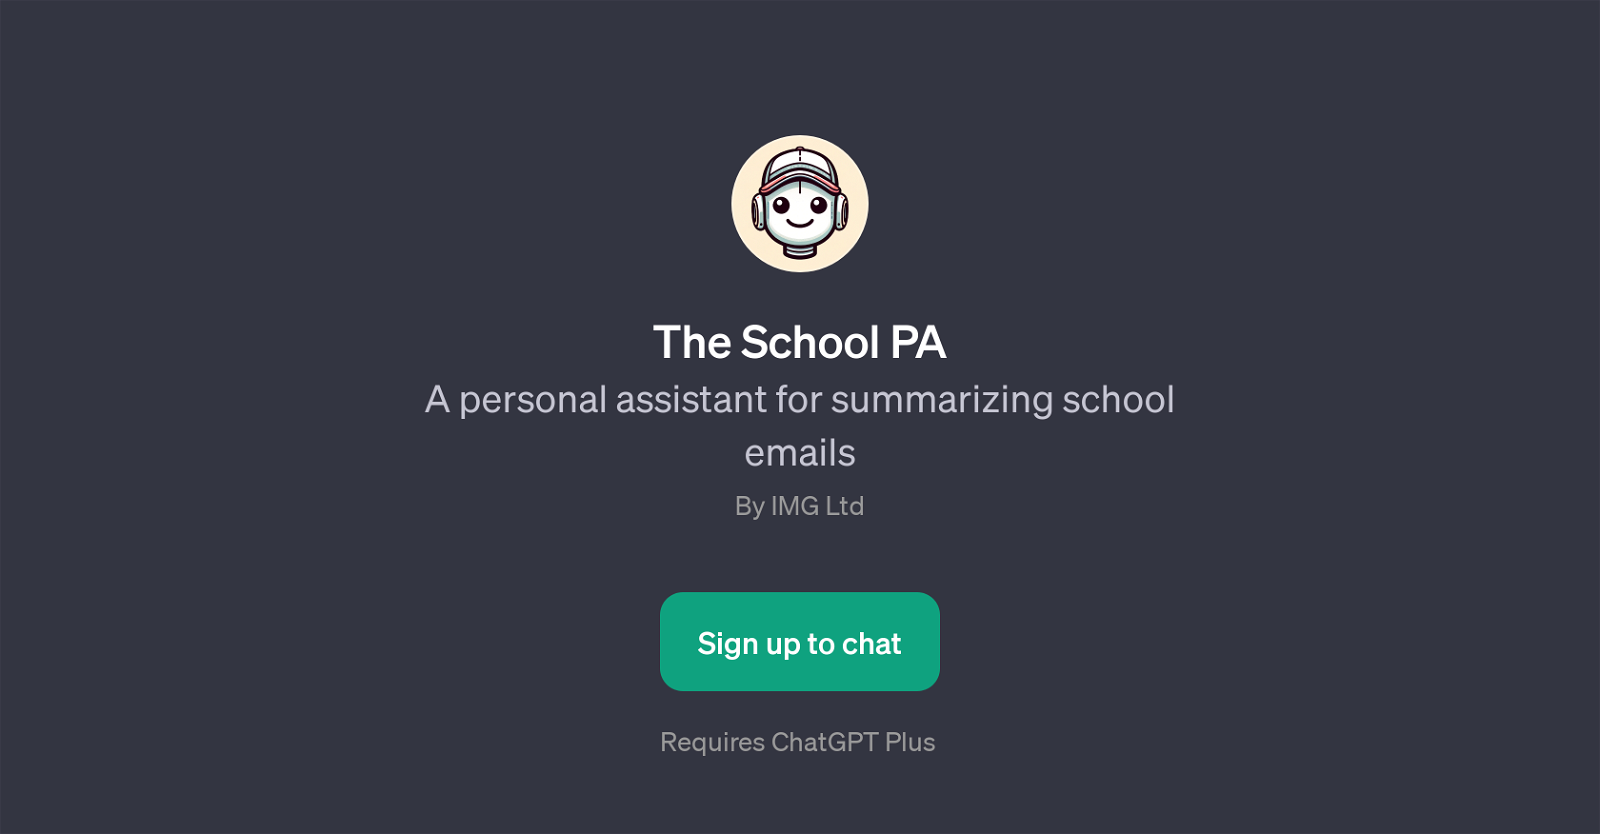 The School PA website